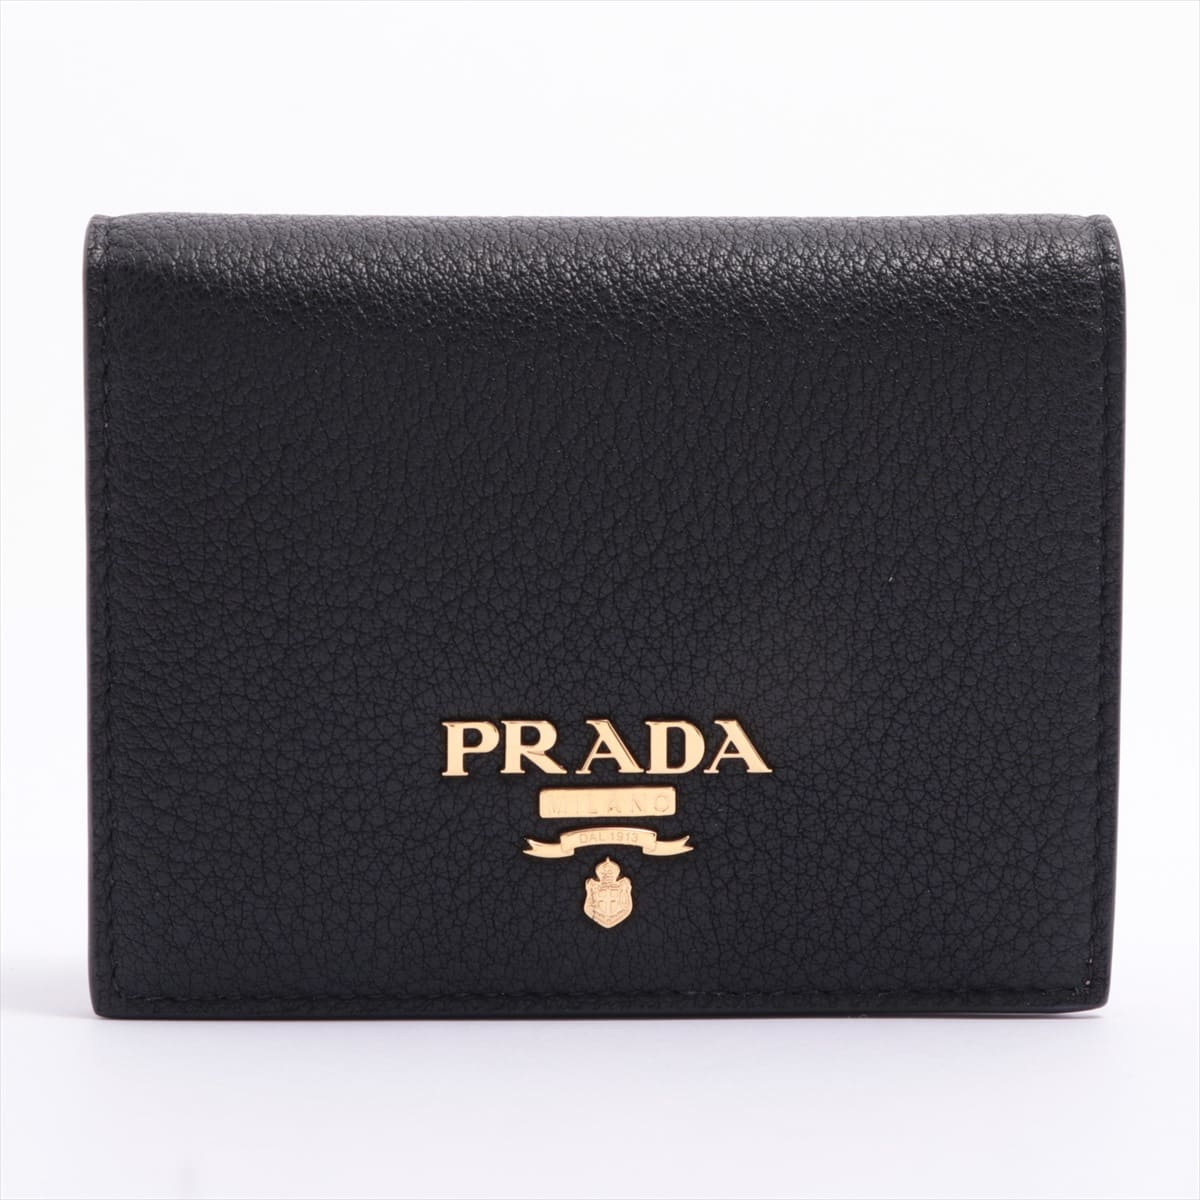 Prada Saffiano 1MV204 Leather Wallet Black